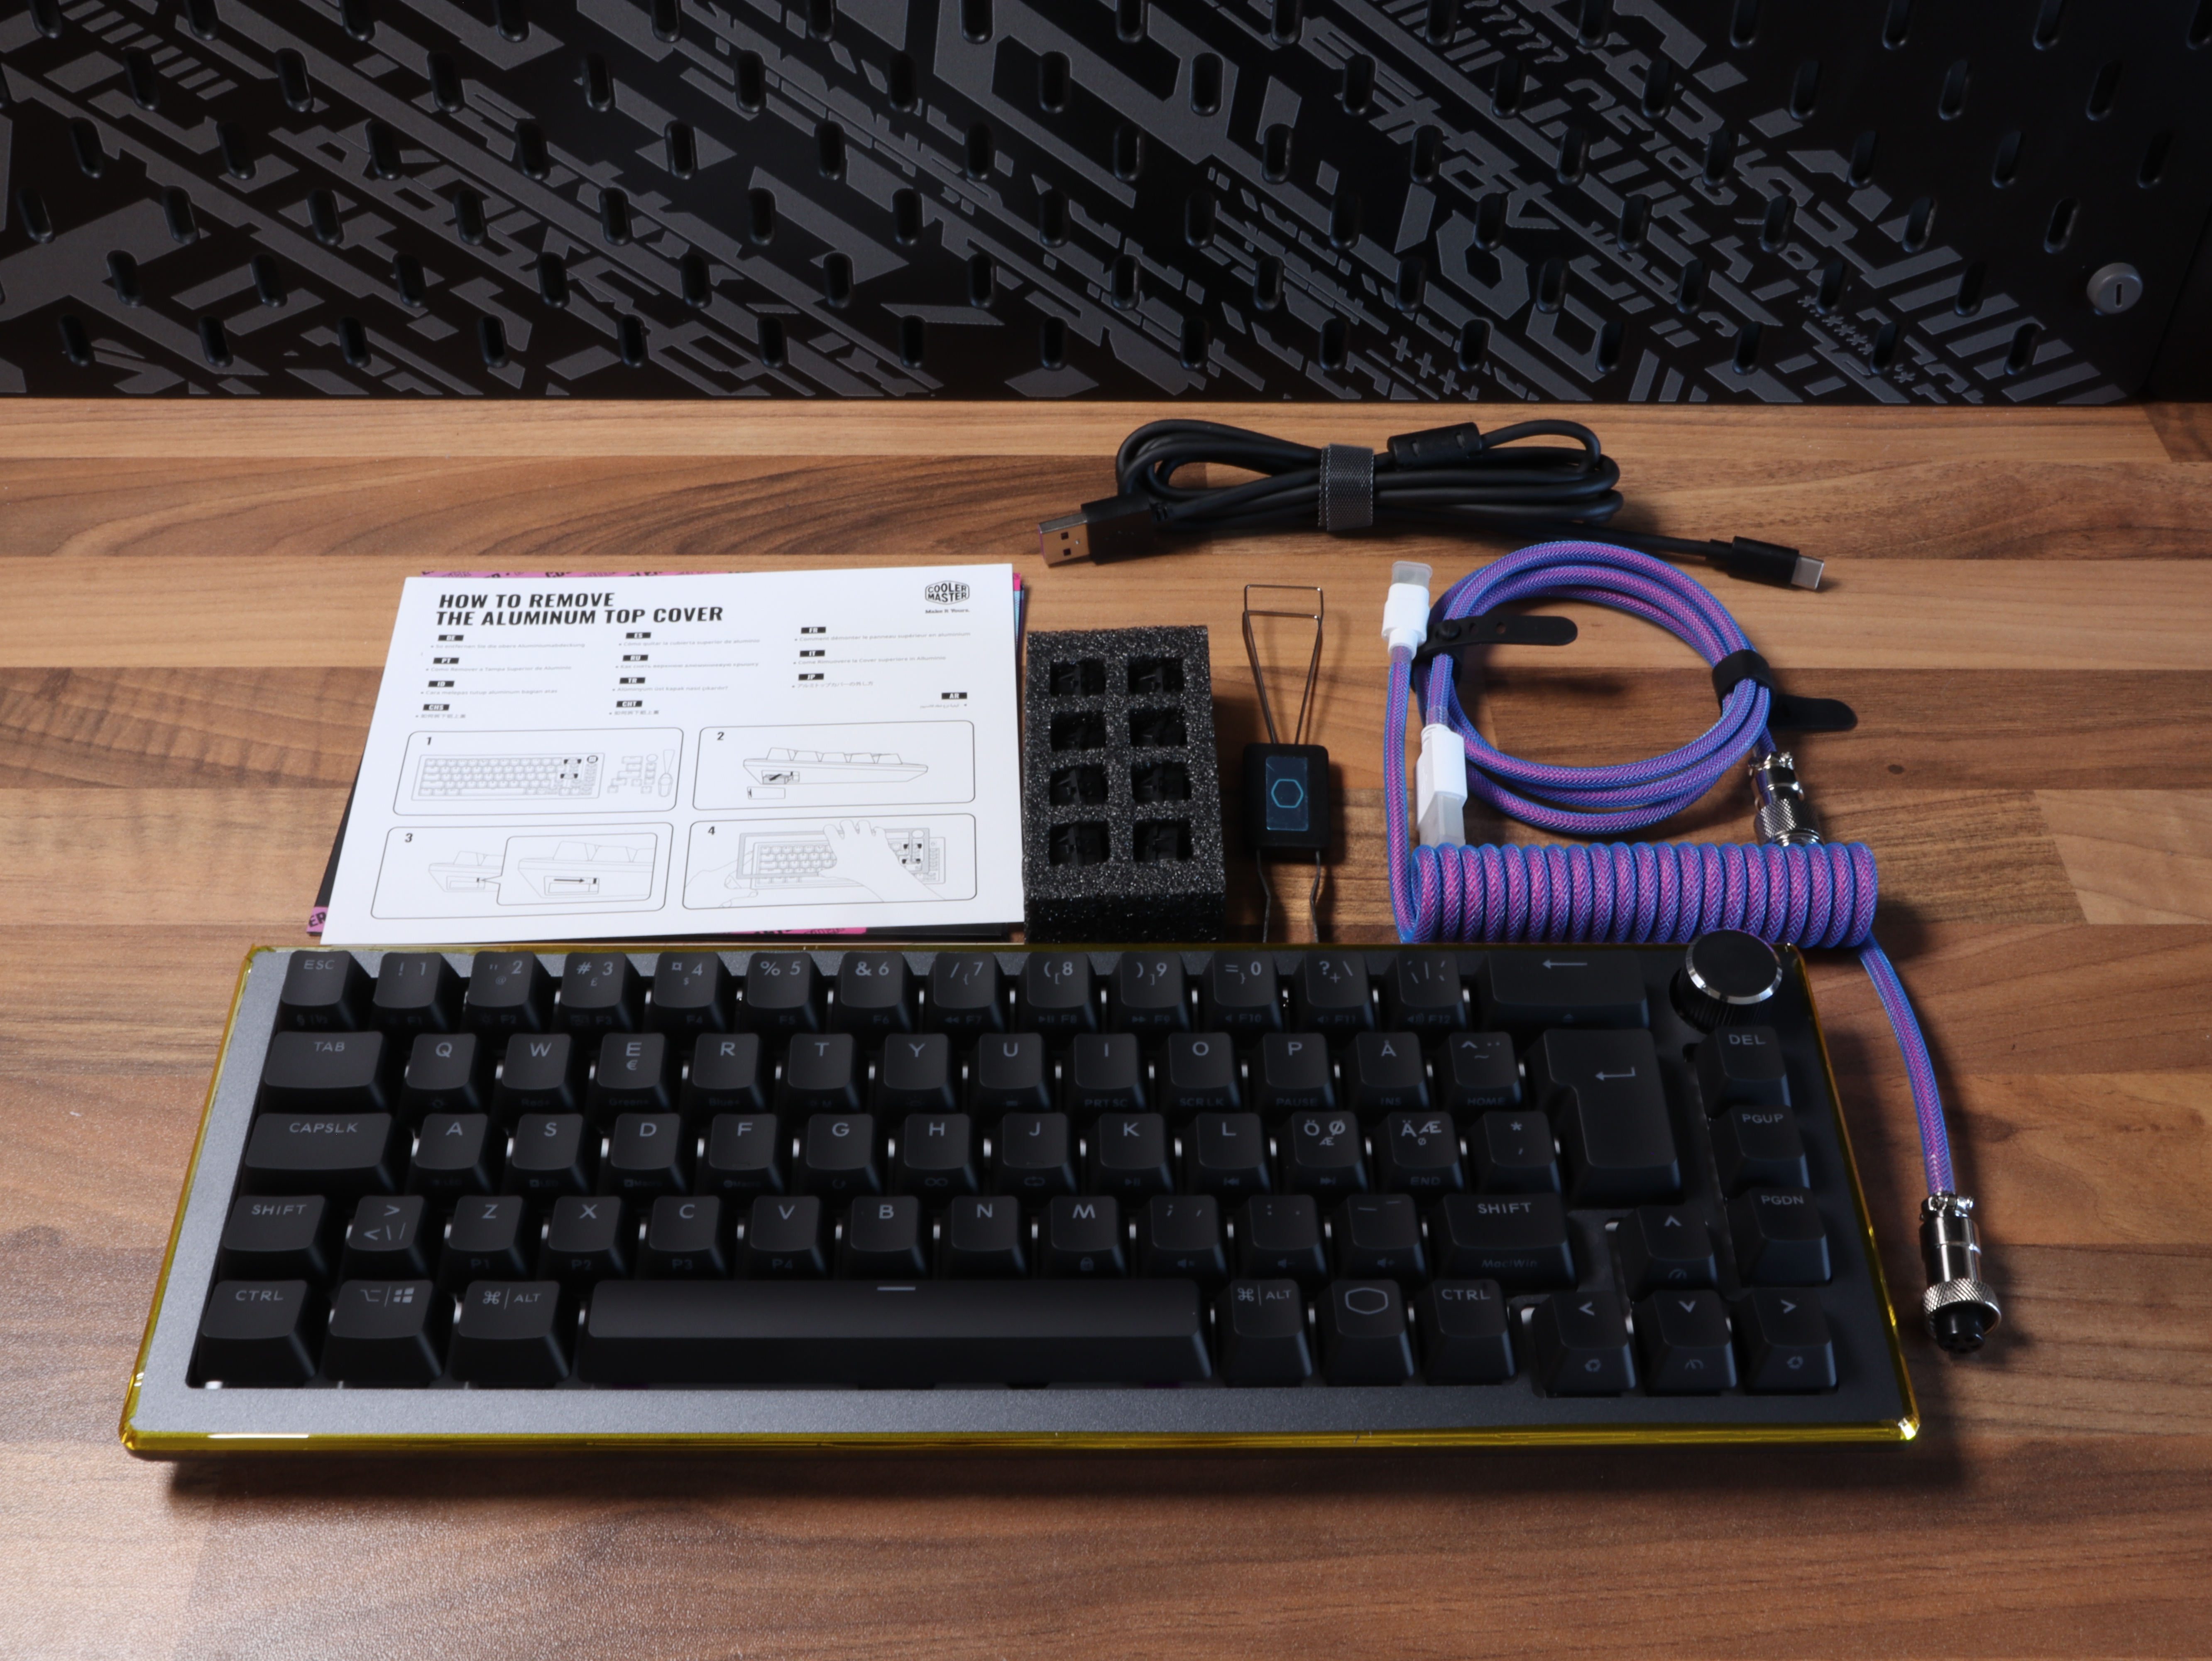 V2 CK720 TKL 65% cable Master keyboard gaming keyboard multimedia wired Cooler kailh RGB.JPG